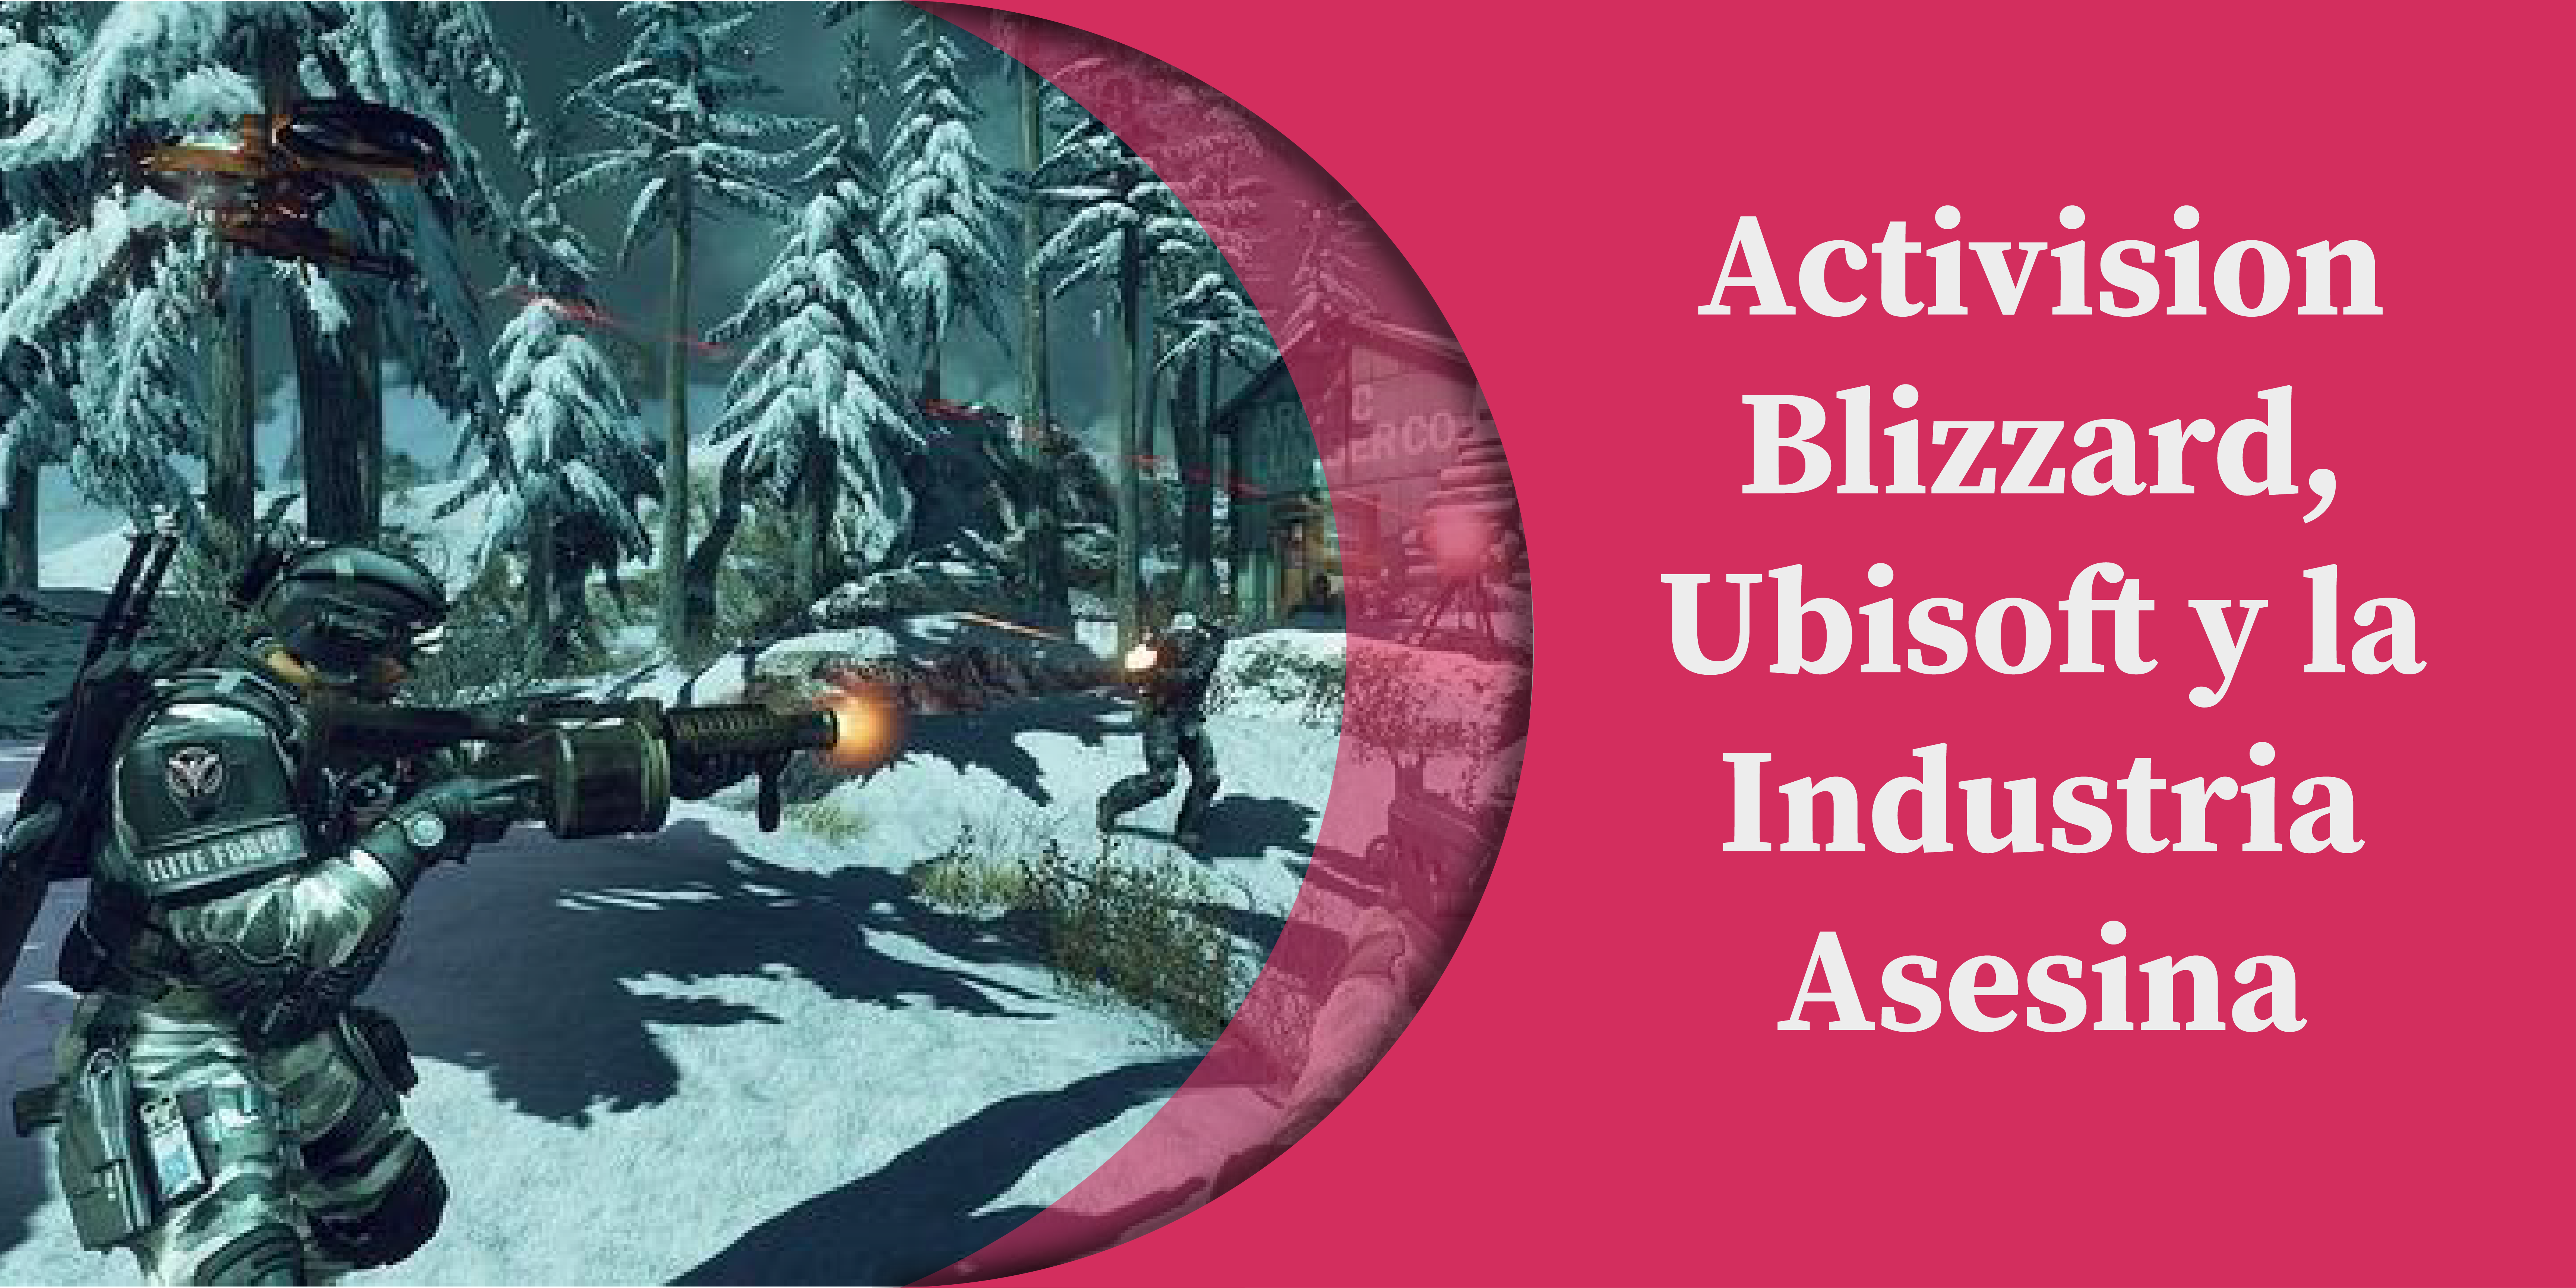 Activision Blizzard, Ubisoft y la Industria Asesina